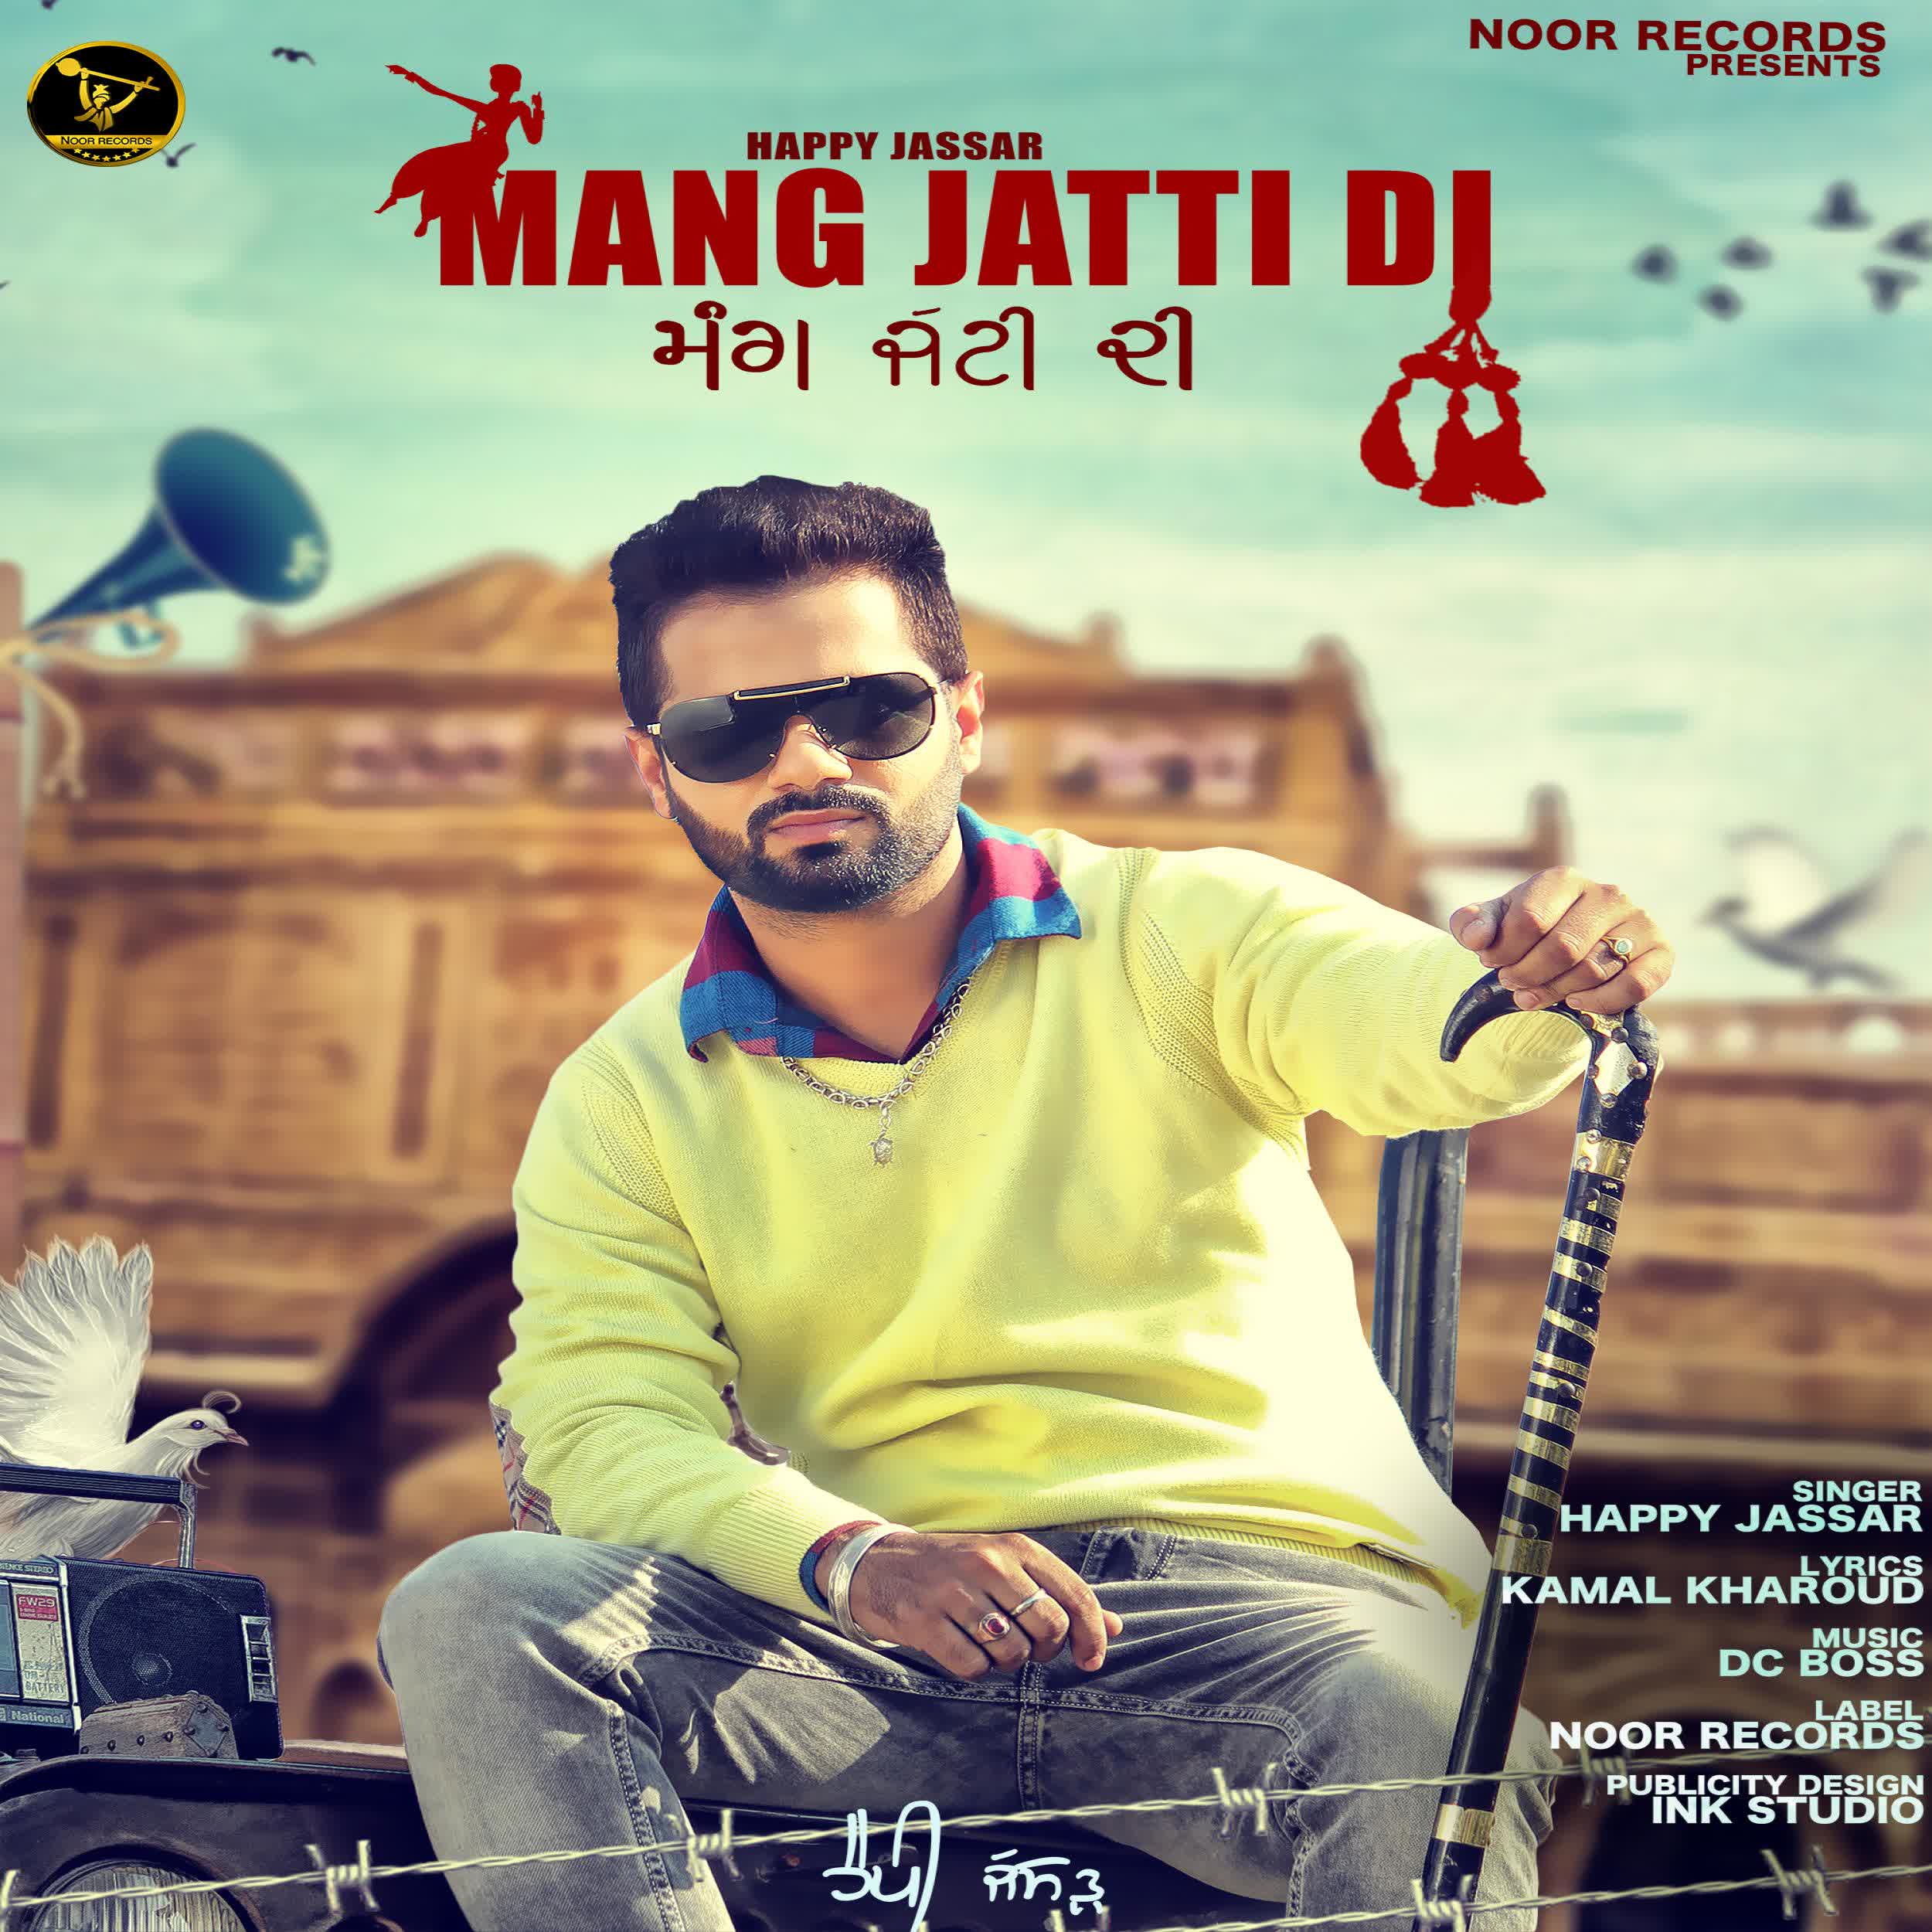 Mang Jatti Di Happy Jassar  Mp3 song download